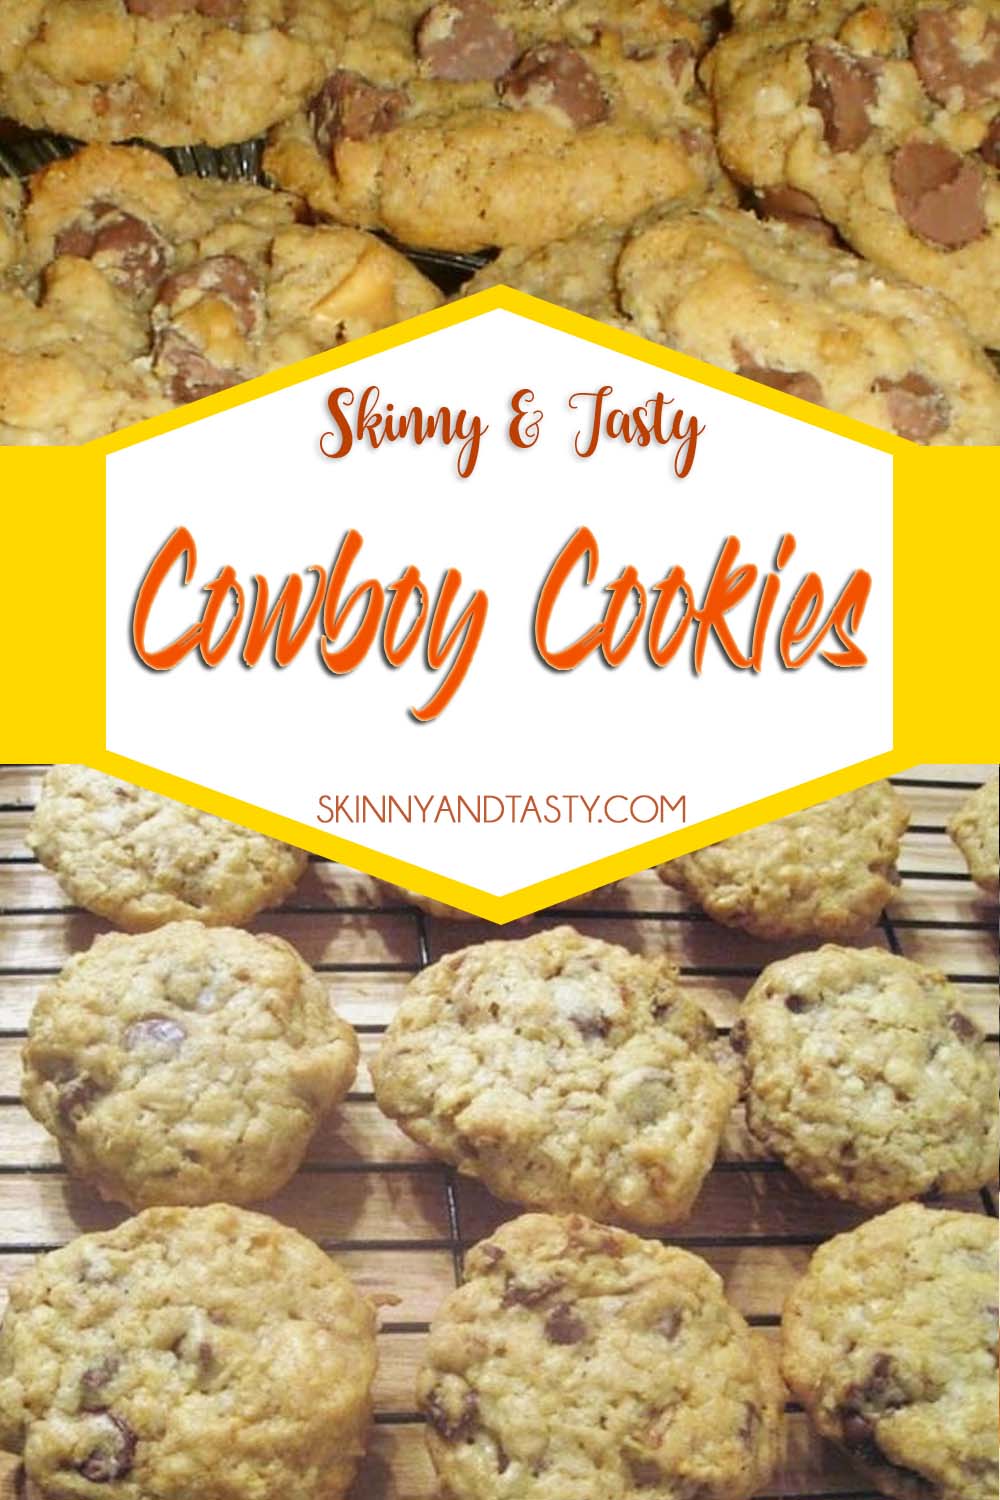 Cowboy Cookies Recipe